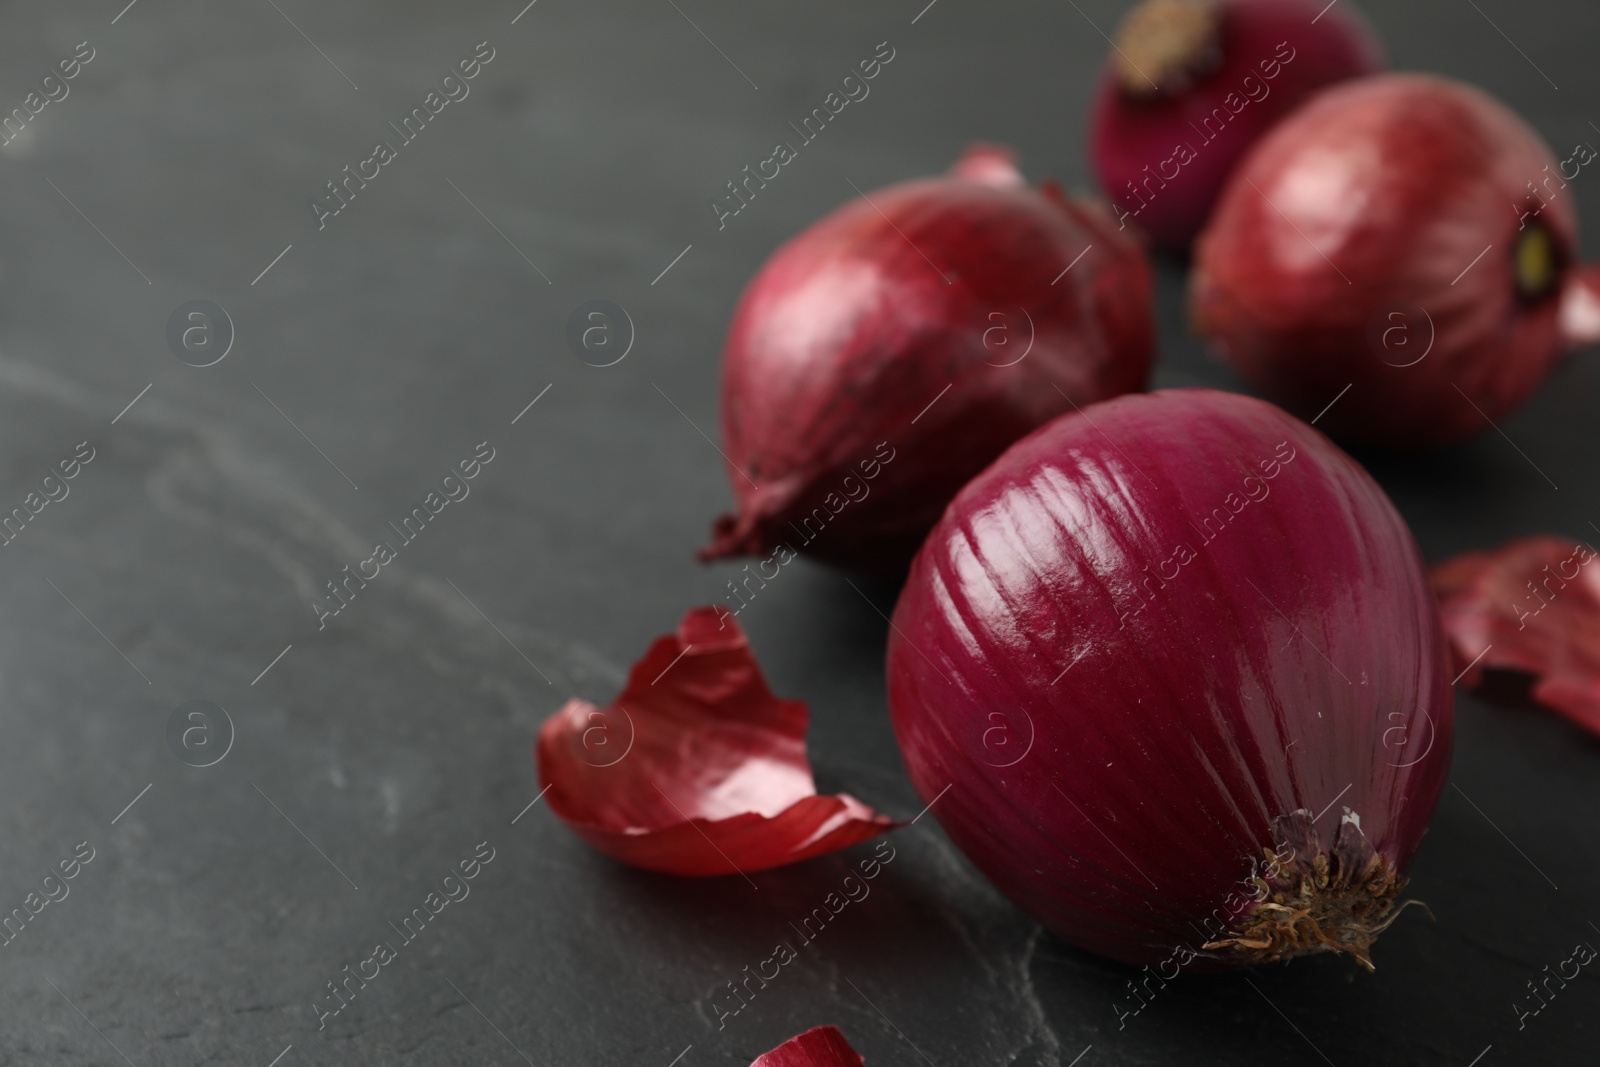 Photo of Ripe red onion bulbs on black slate table, closeup